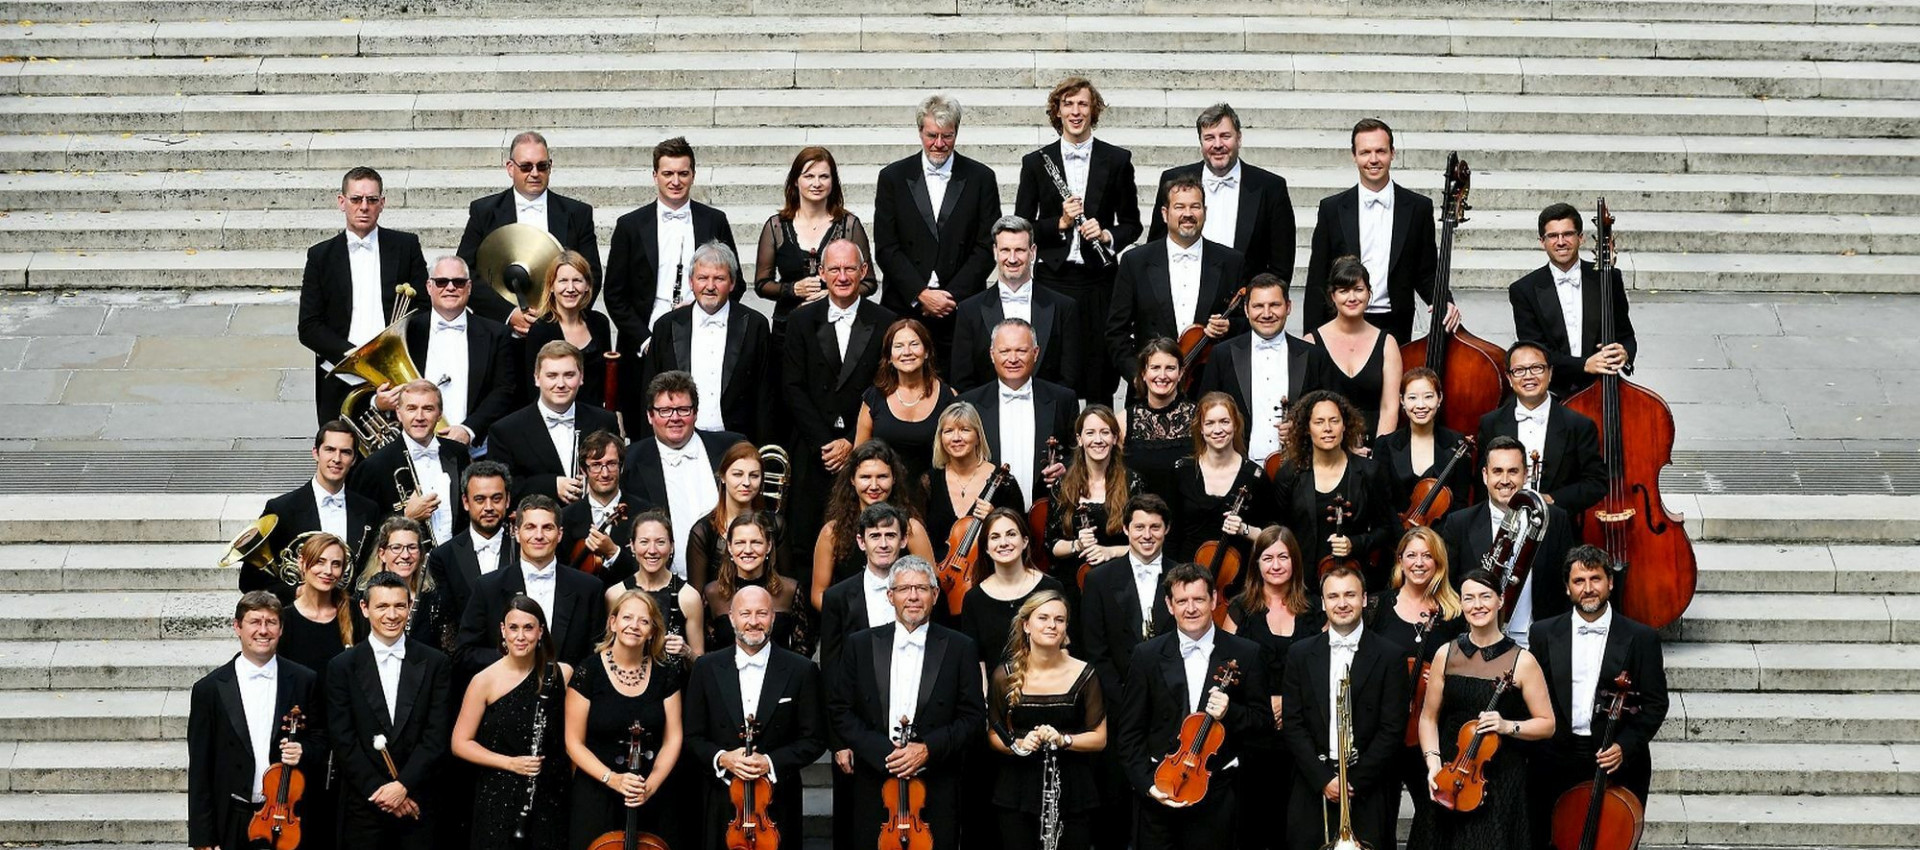 Vasily Petrenko & Royal Philharmonic Orchestra, Palace Of Arts Budapest, 17 May